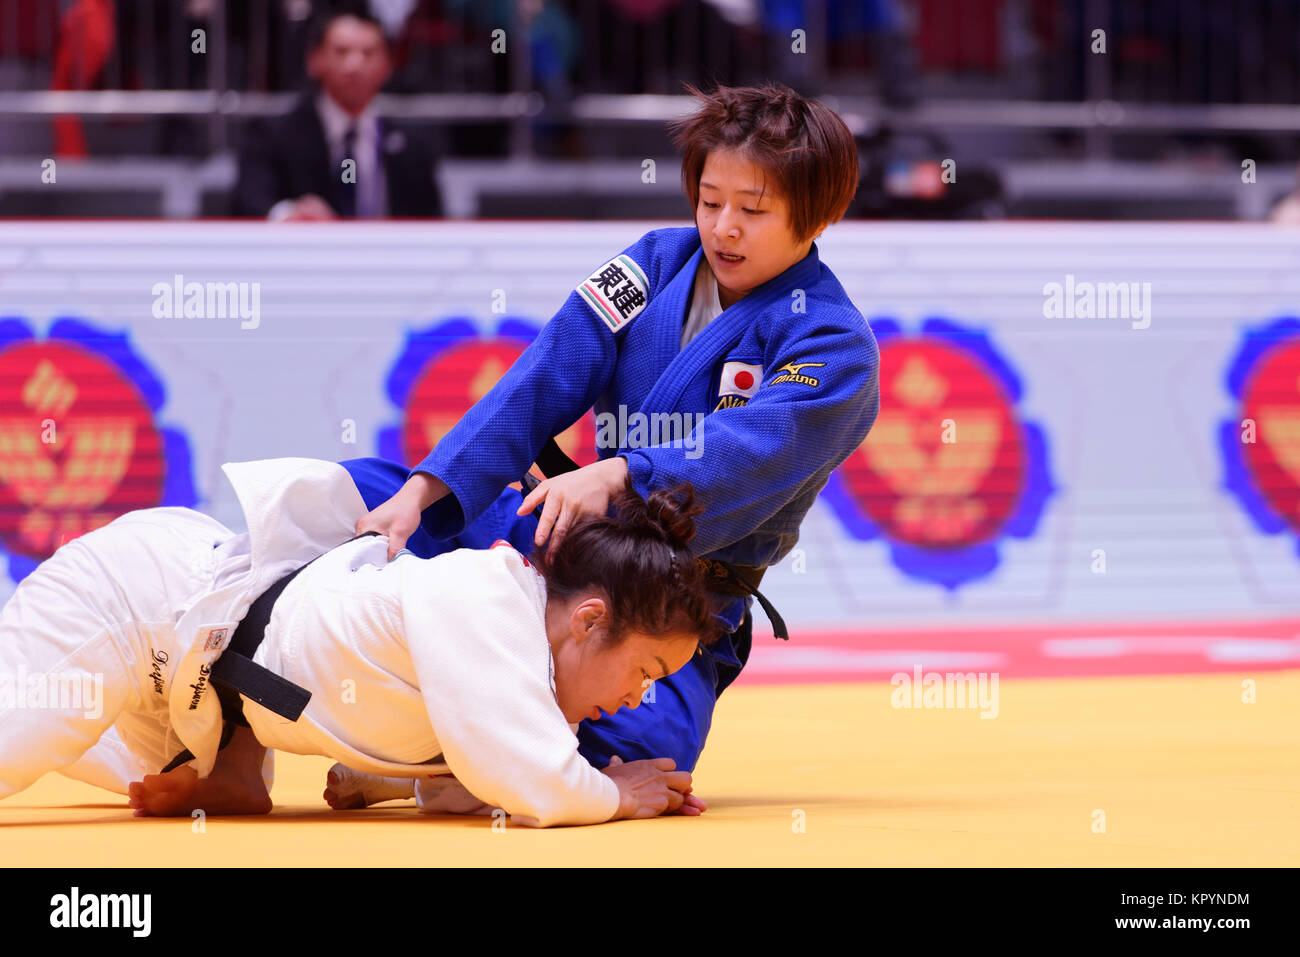 Final fight Sumiya Dorjsuren, Mongolia (white) vs Tsukasa Yoshida, Japan during Judo World Masters tour Stock Photo